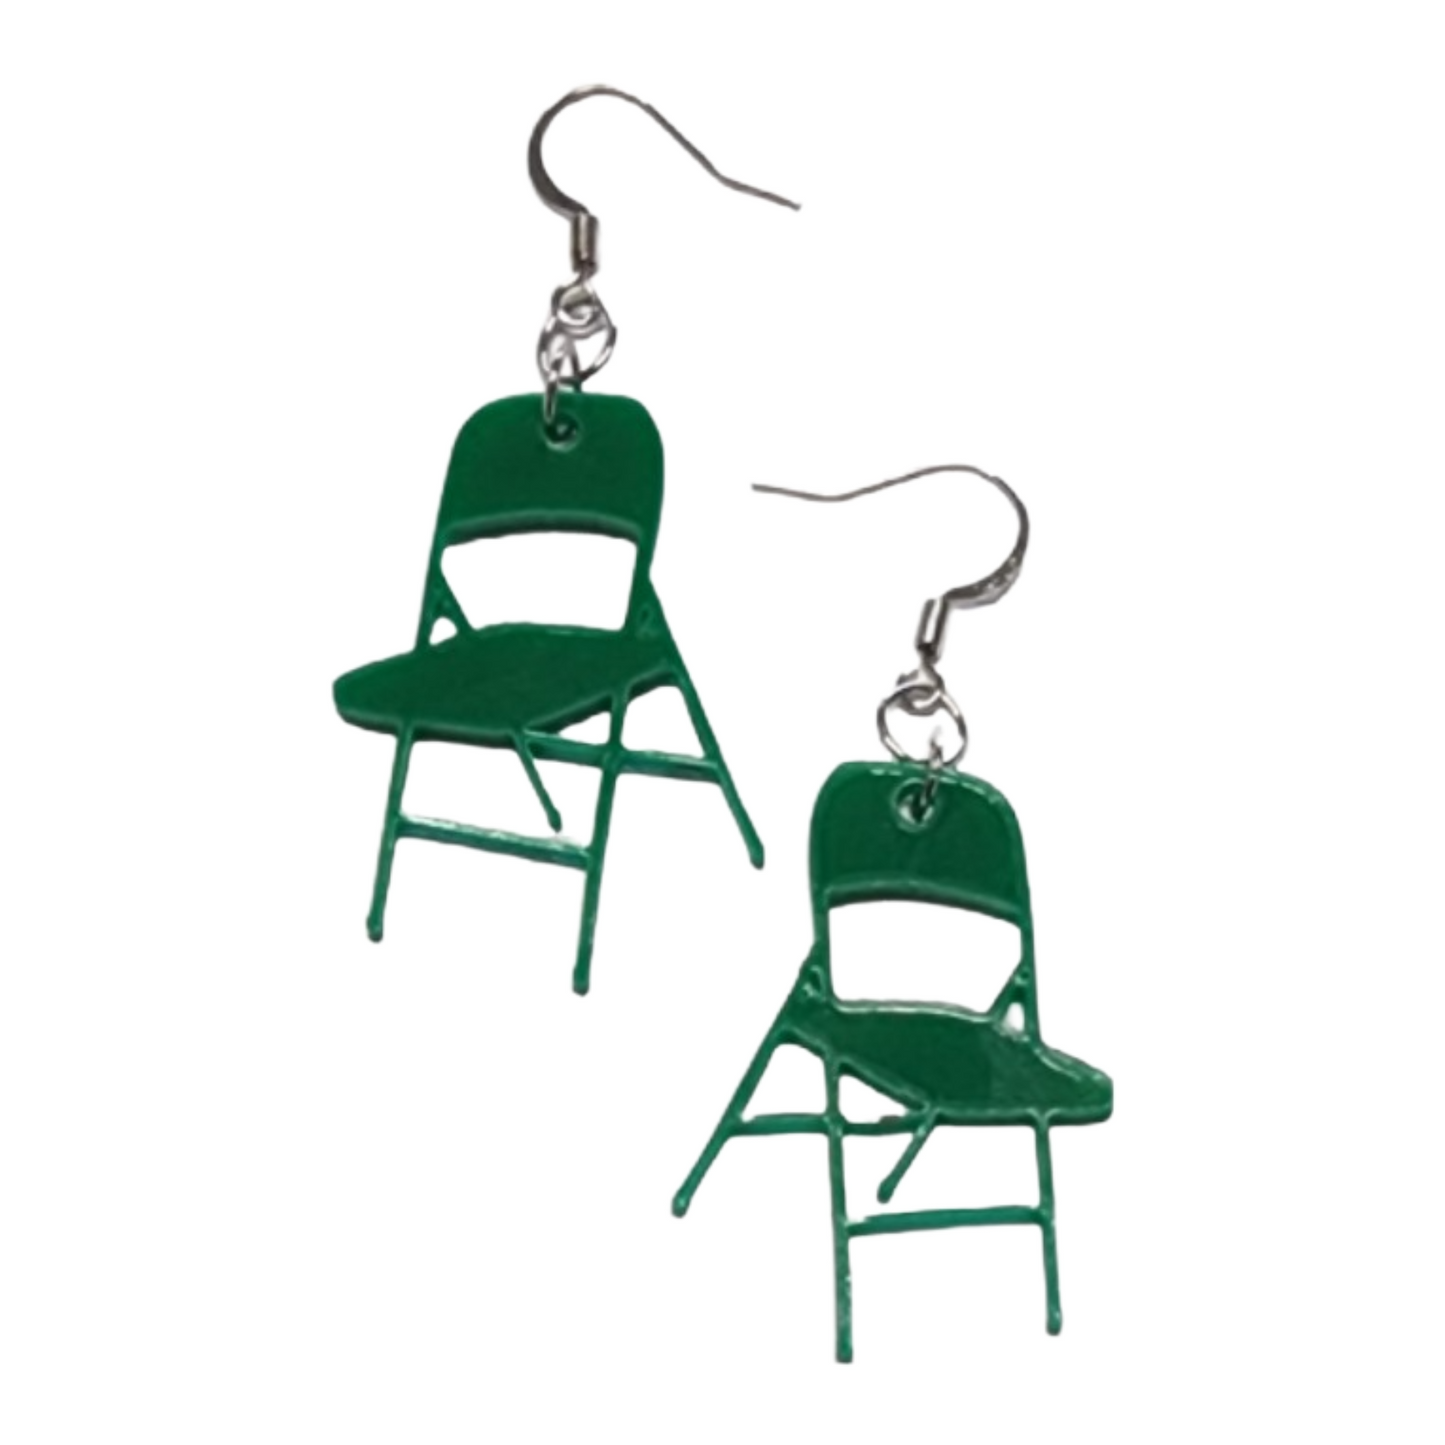 Acrylic Folding Chair Earrings